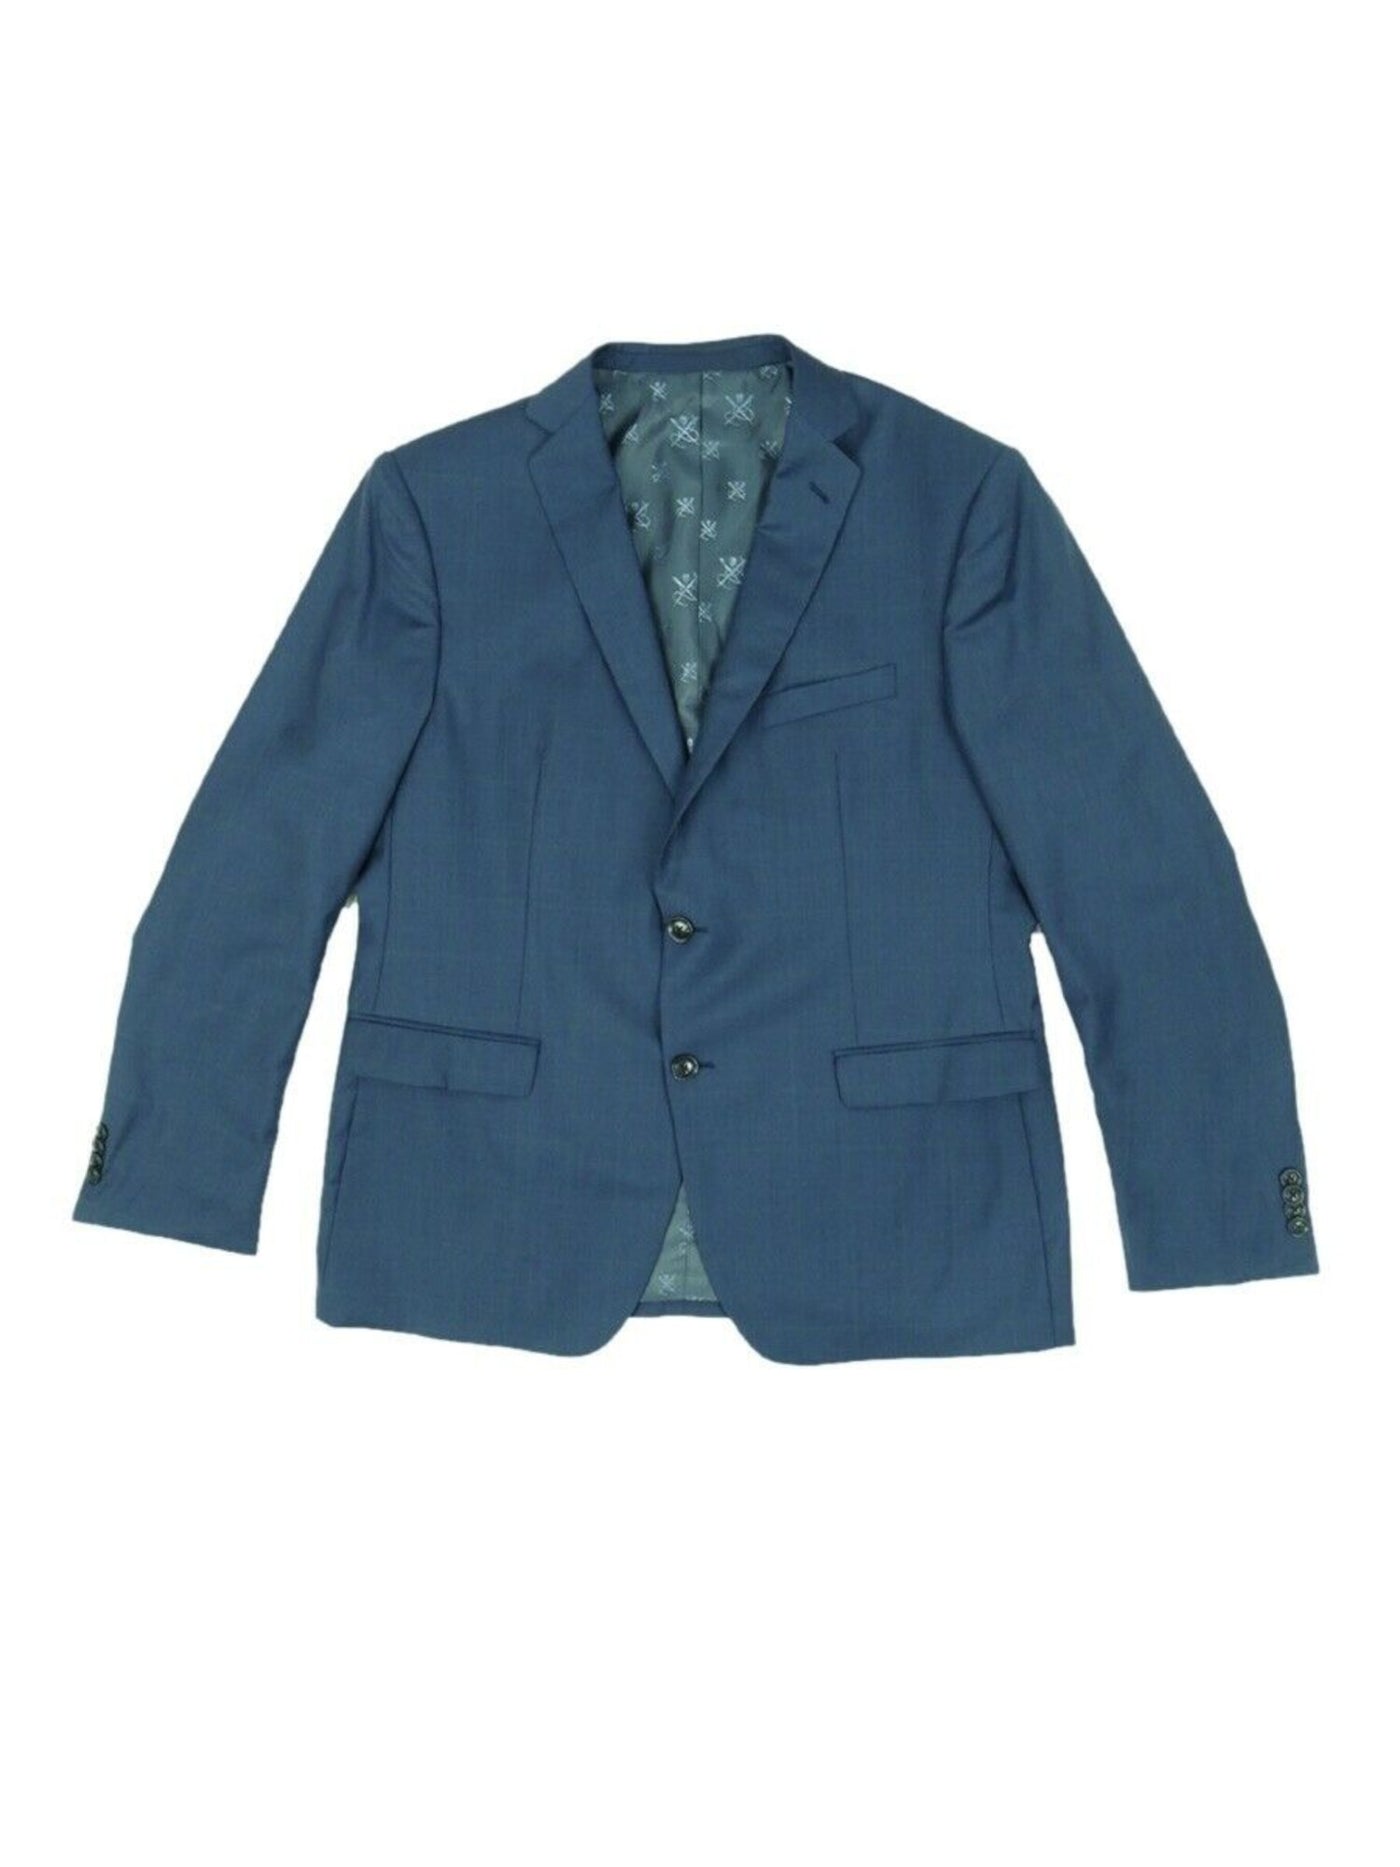 John Varvatos Mens Navy Single Breasted, Classic Fit Wool Blend Suit Separate Blazer Jacket 40R